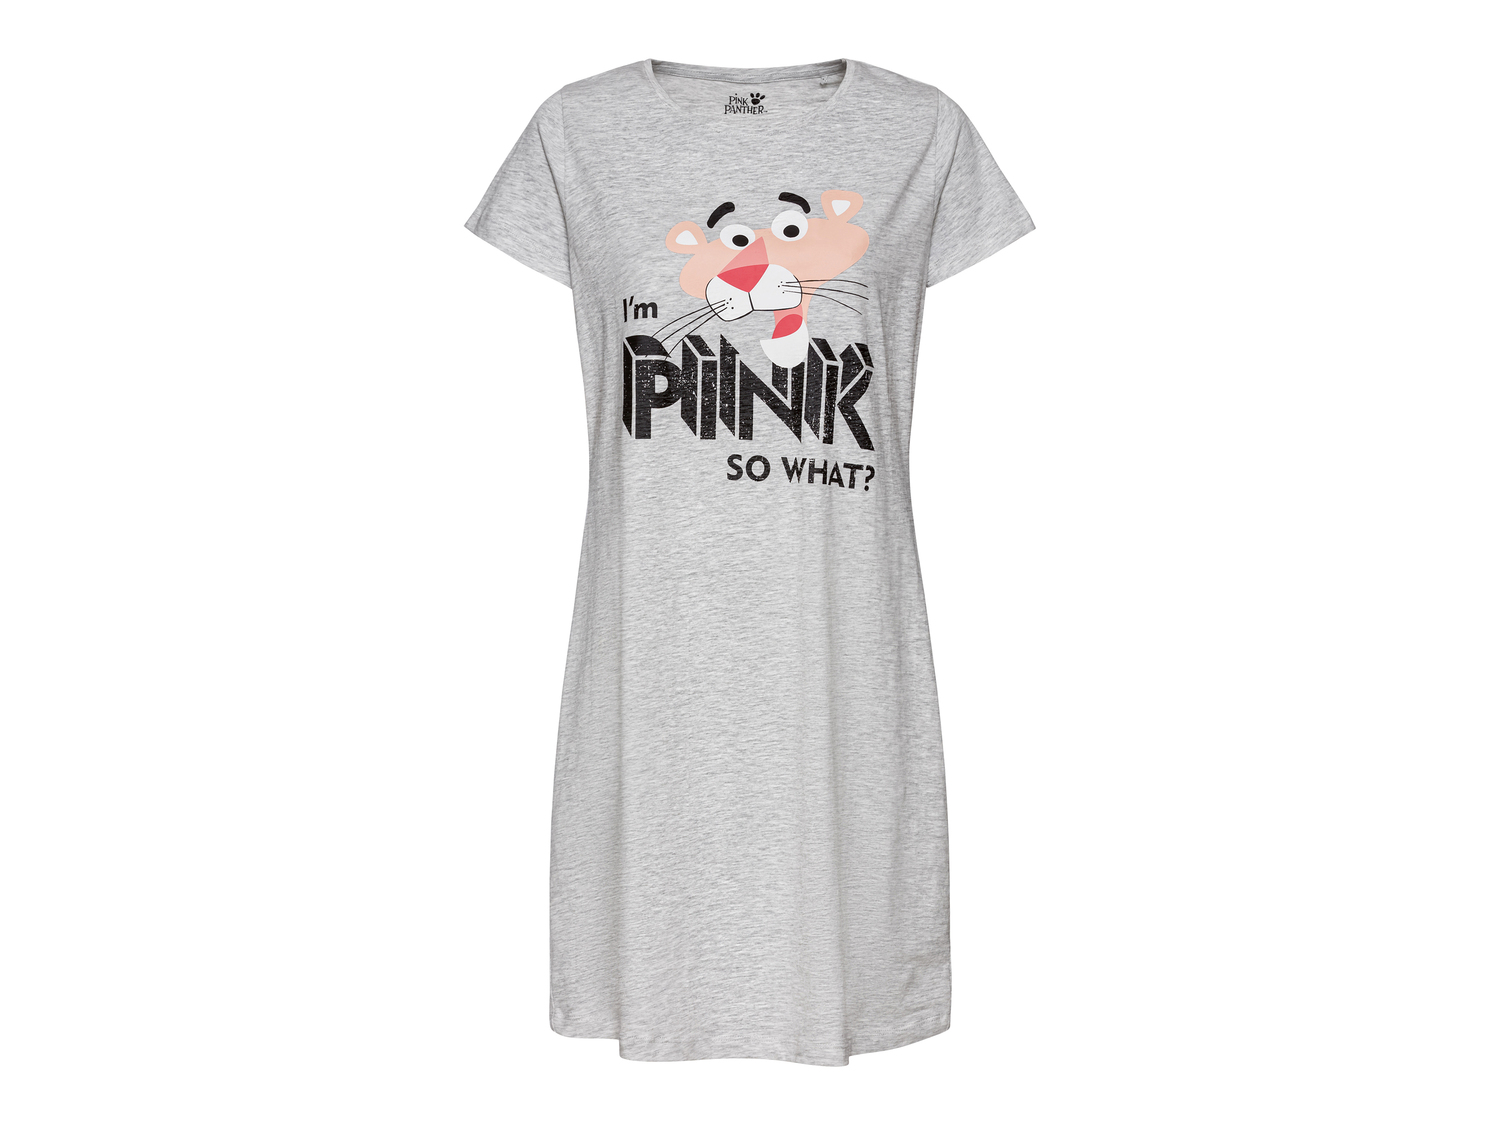 Maxi t-shirt da donna Peanuts, Pantera Rosa, Looney Tunes Oeko-tex, prezzo 7.99 ...